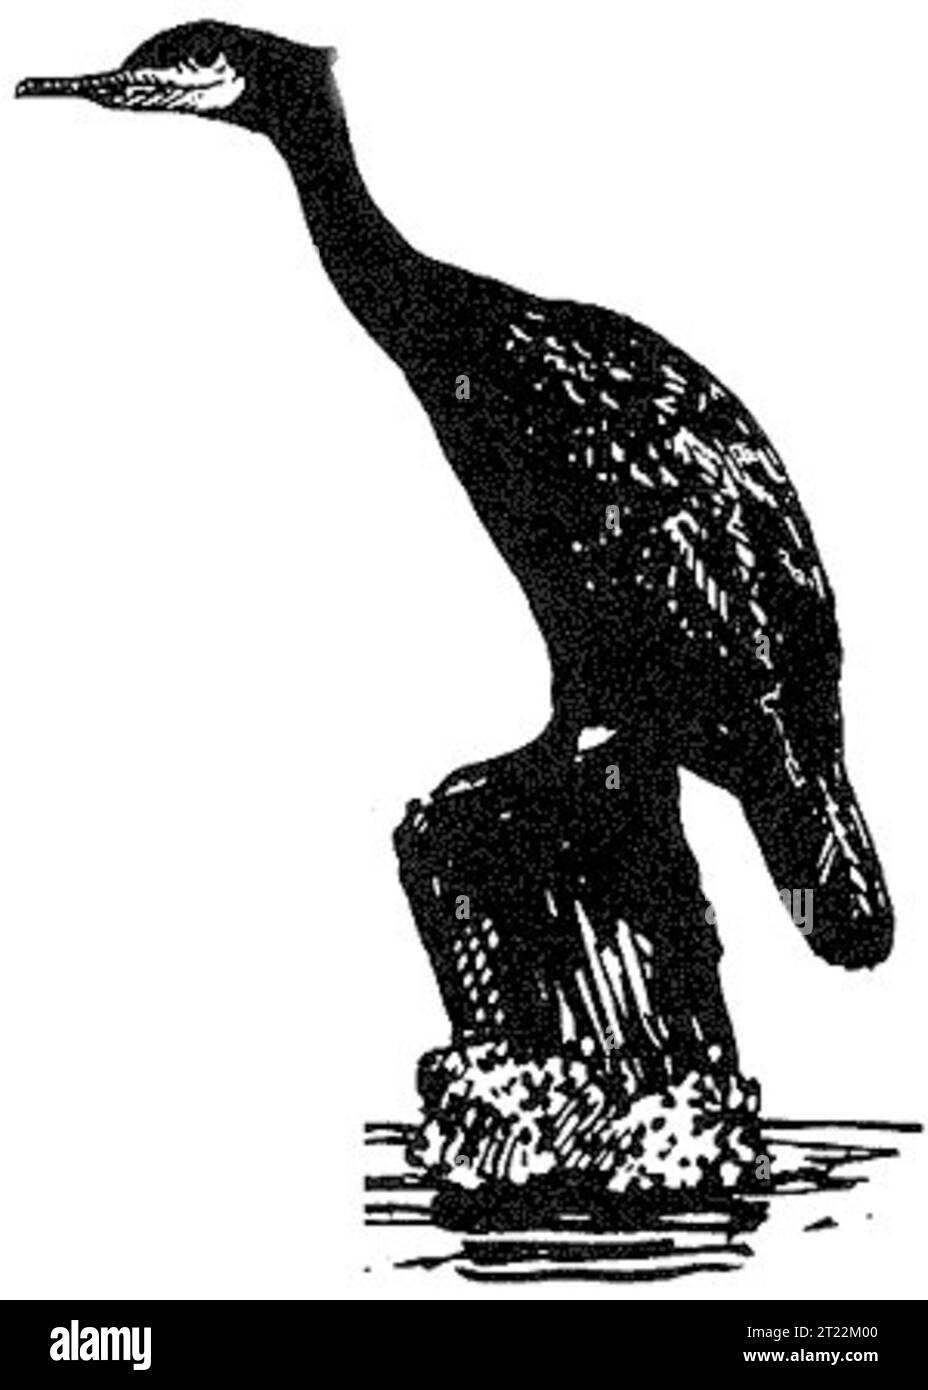 Schöpfer: Hines, Robert W. Themen: Vögel; Vögel; Schwimmen; Tier; Tiere; Illustrationen; Illustrationen; Kunst; Strichkunst. 1998 - 2011. Stockfoto